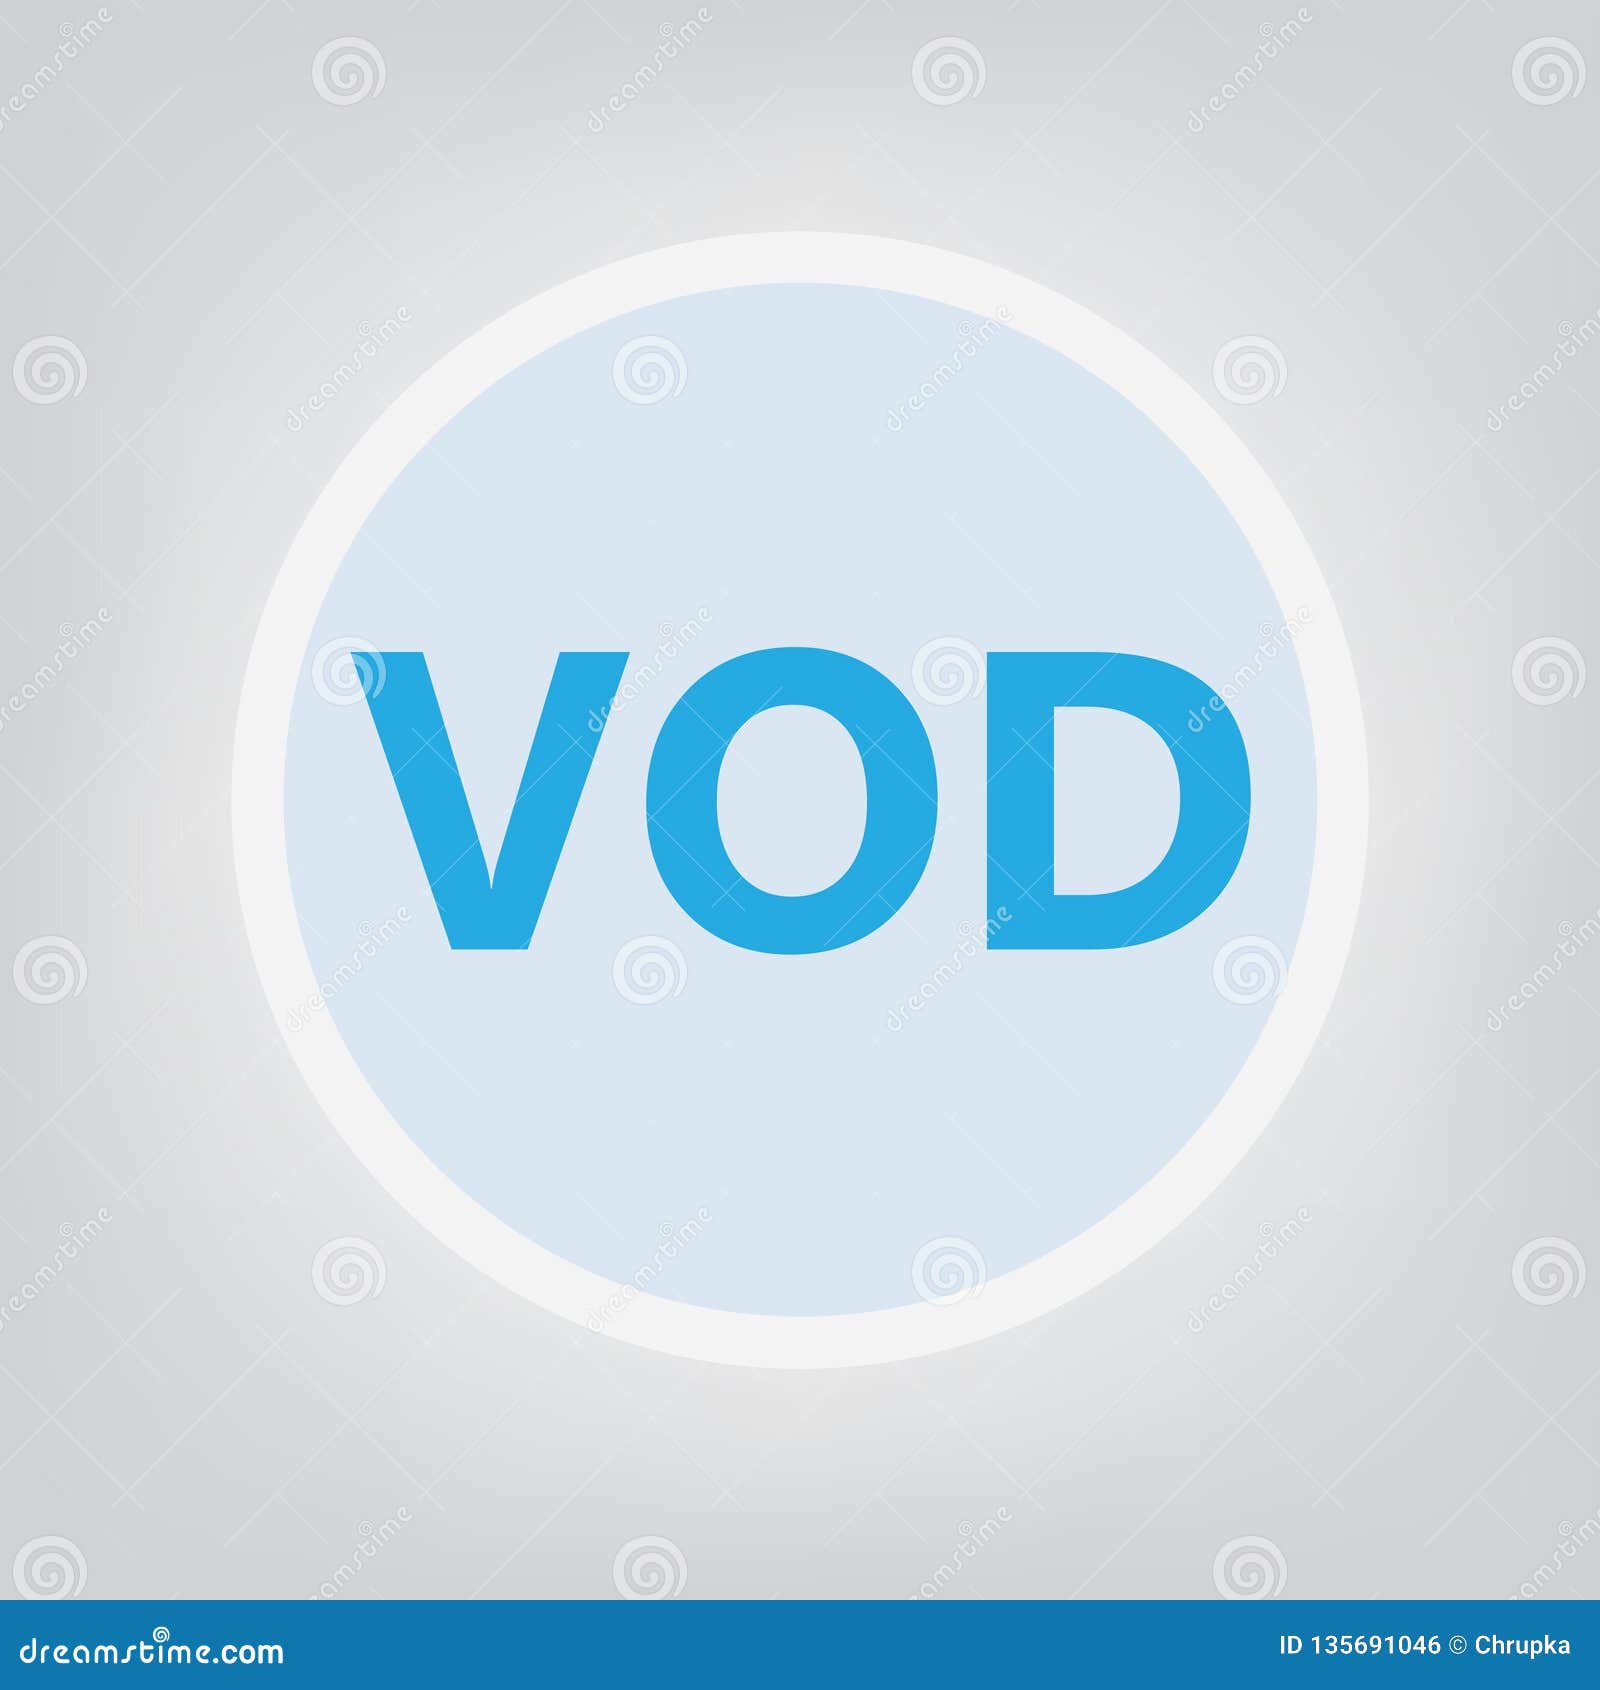 VOD Video on Demand Acronym Stock Vector